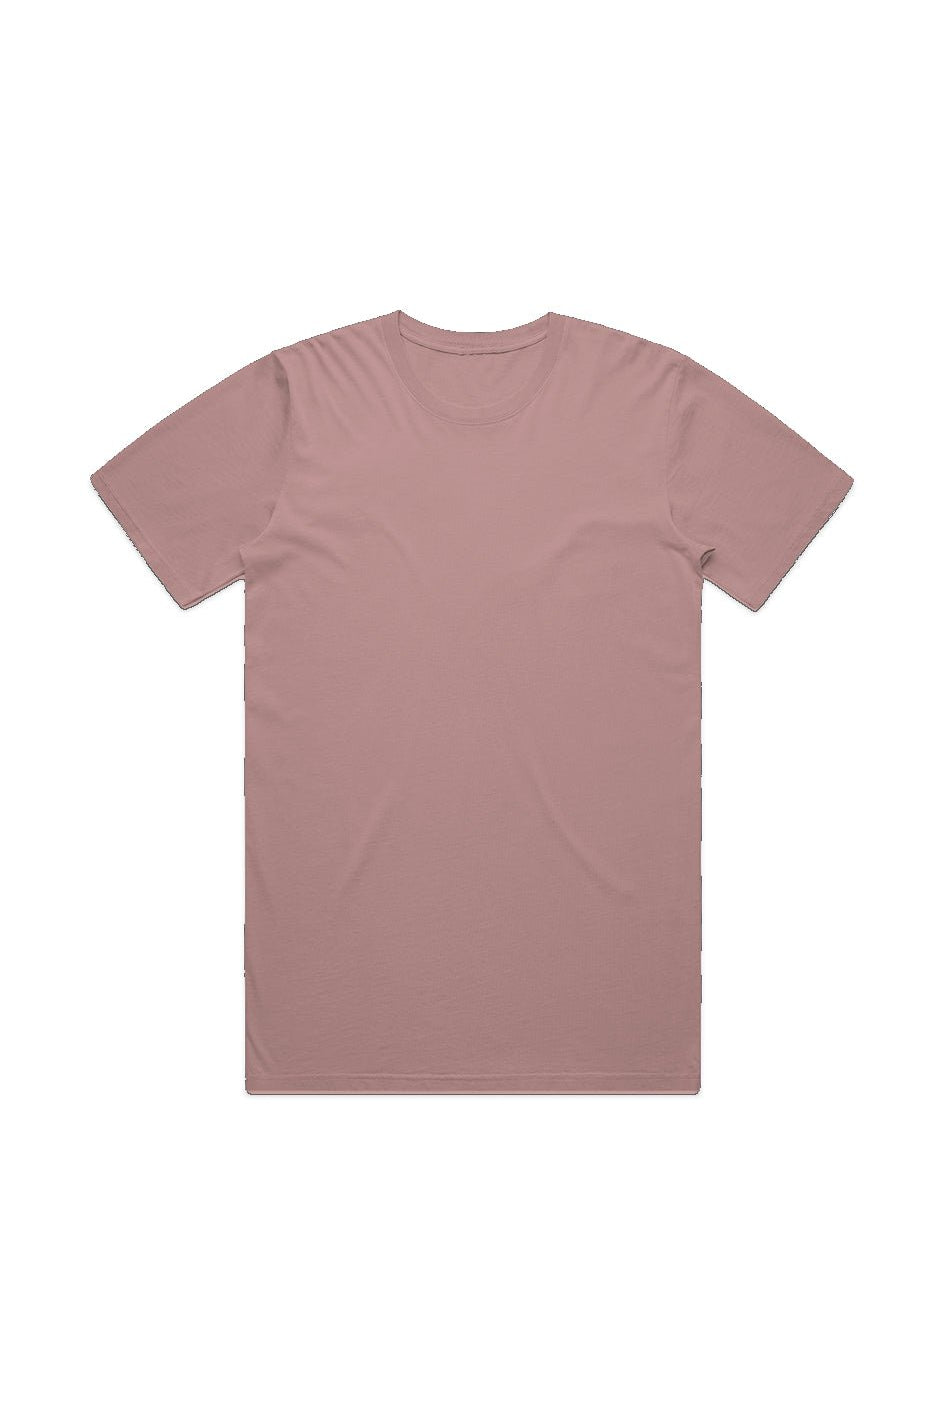 Men's Premium Faded Rose T-shirt - Men's T-Shirts - Apliiq - Men's Premium Faded Rose T-shirt - APQ-4662480S6A0 - s - Faded Rose - Dragon Foxx™ - Dragon Foxx™ Men's Premium Faded Rose T-shirt - Dragon Foxx™ Men's T-shirt